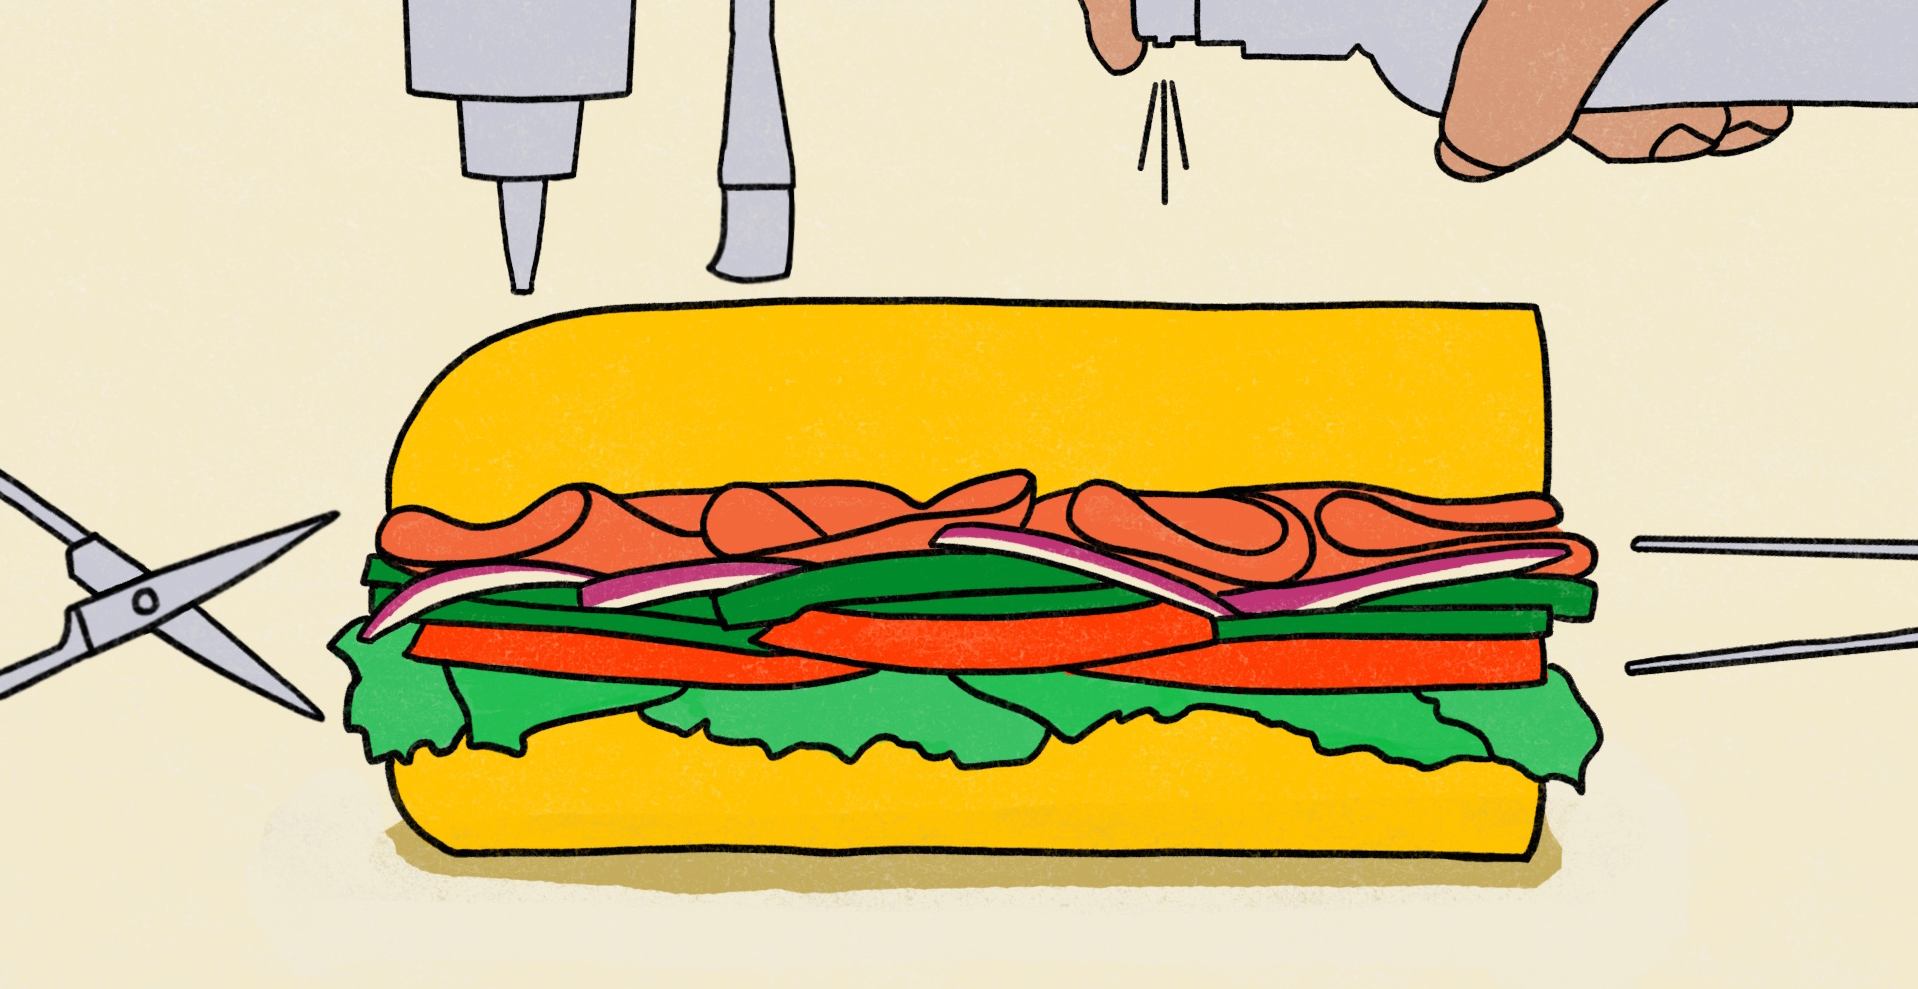 Drawing of a sub sandwich.